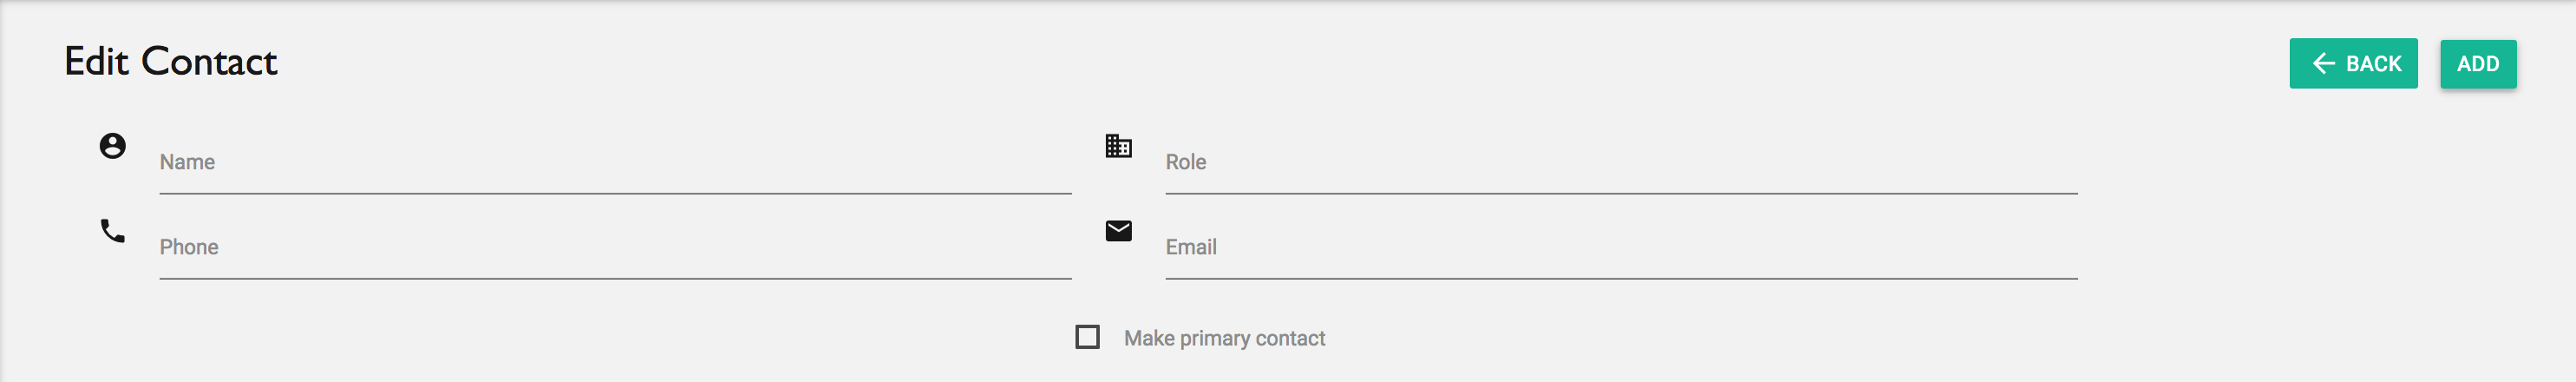 edit organization contacts